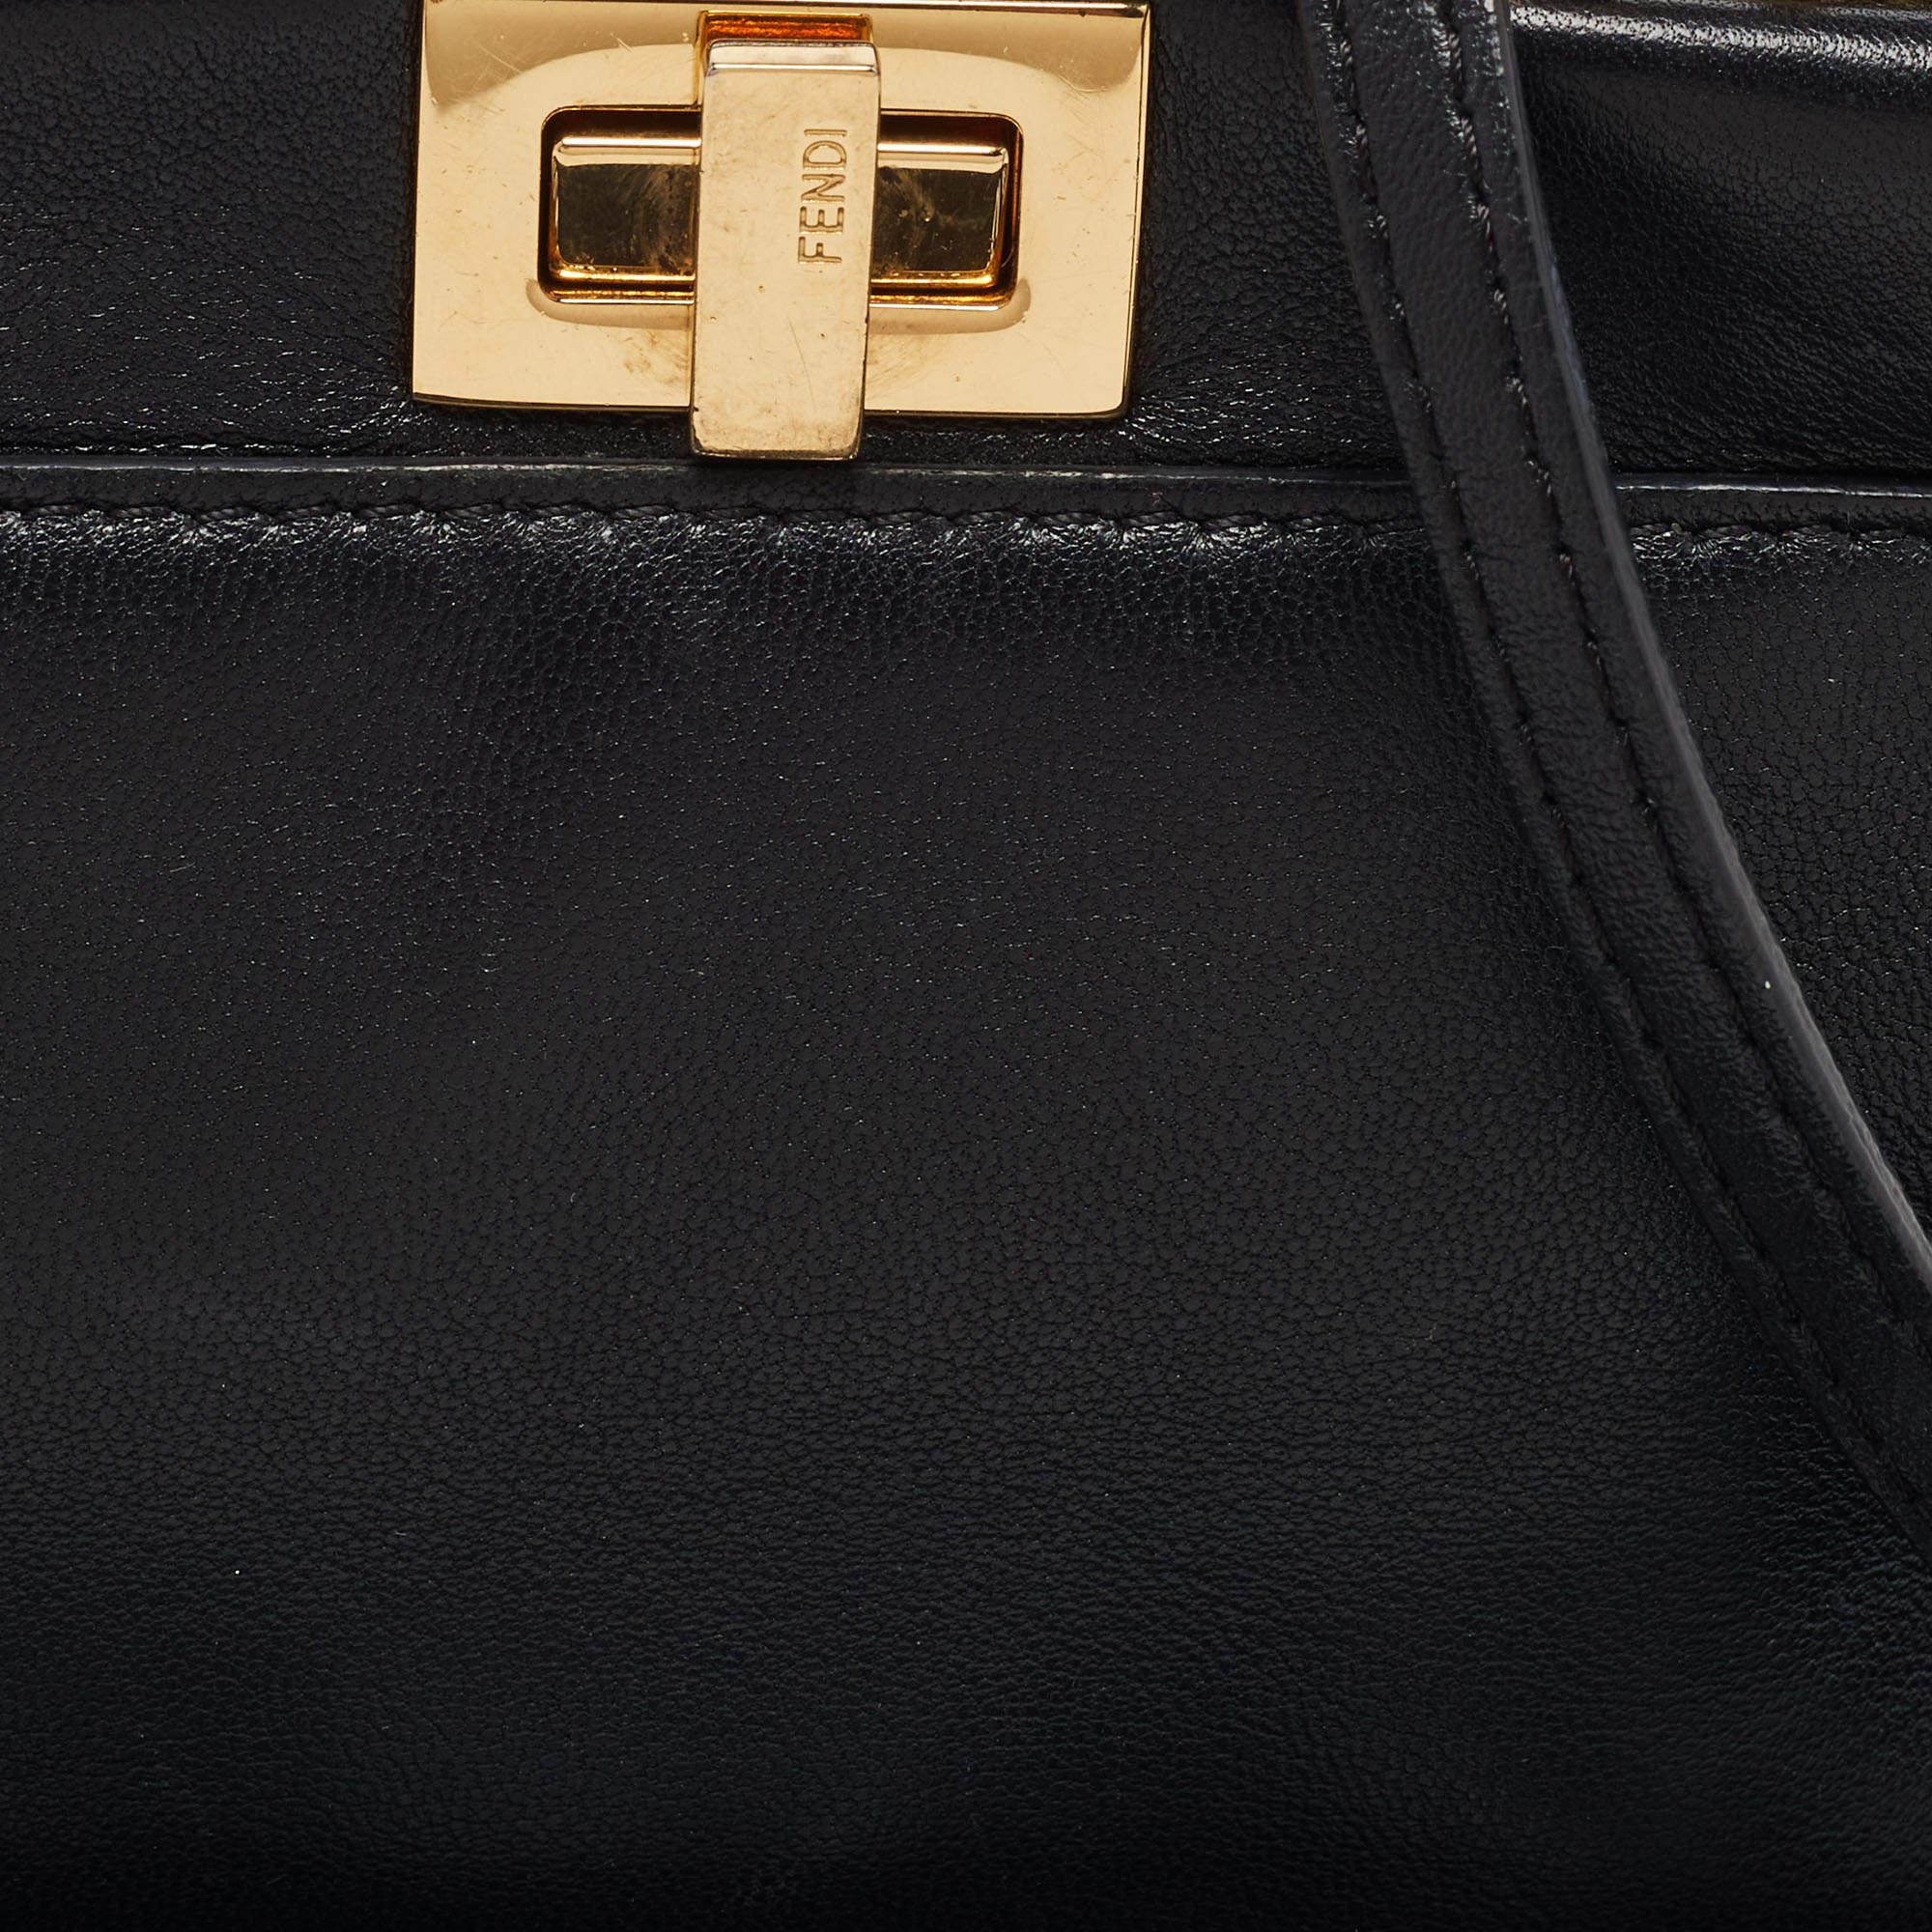 Fendi Black Leather Micro Peekaboo Crossbody Bag 5